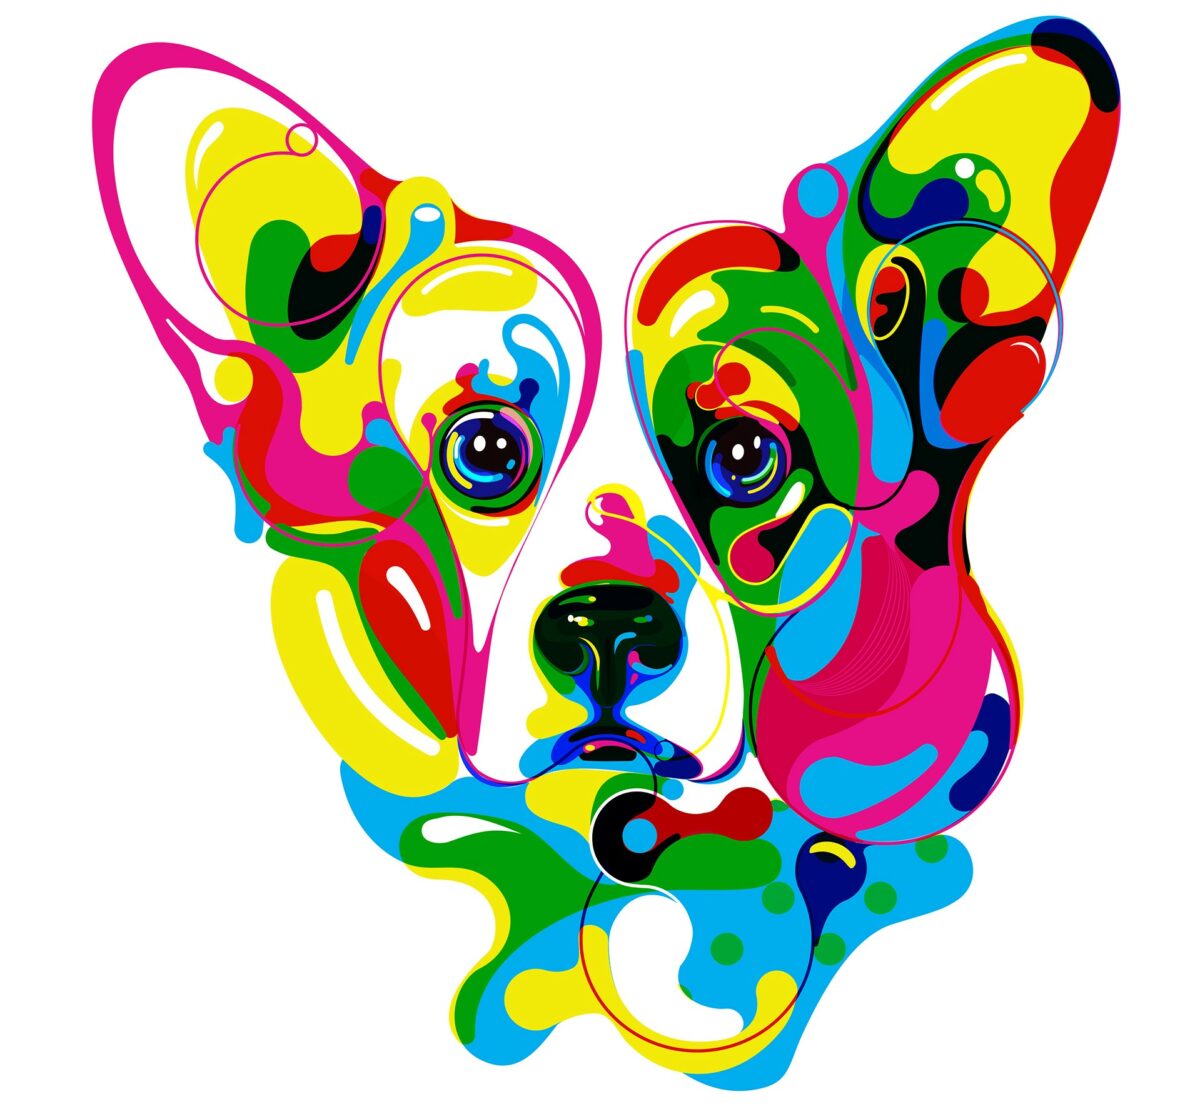 Kaleidoscopic Illustrations Of Expressive Dogs By Marina Okhromenko 9